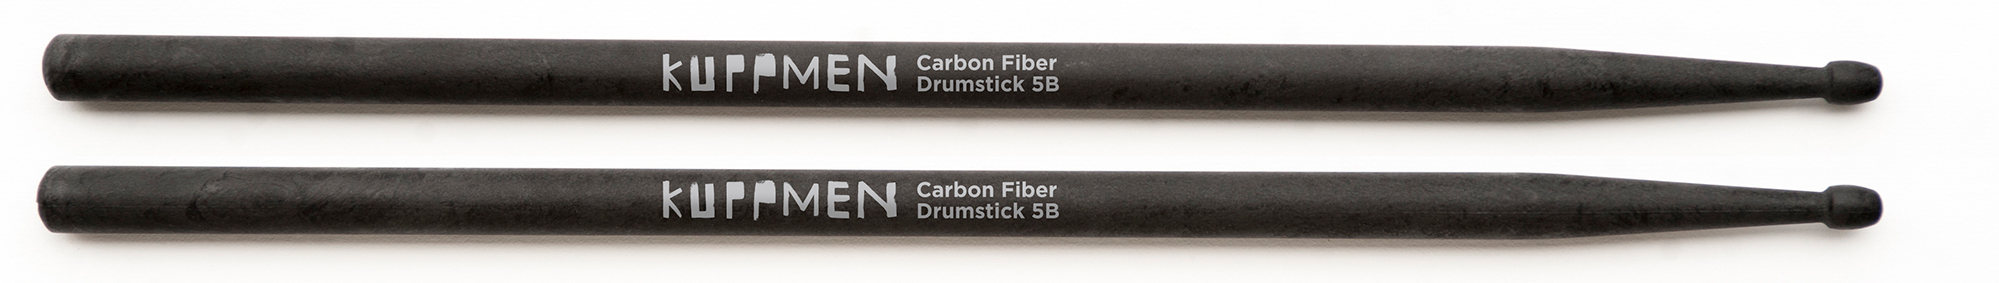 Kuppmen Fibre Carbone  5b - Drum stick - Main picture